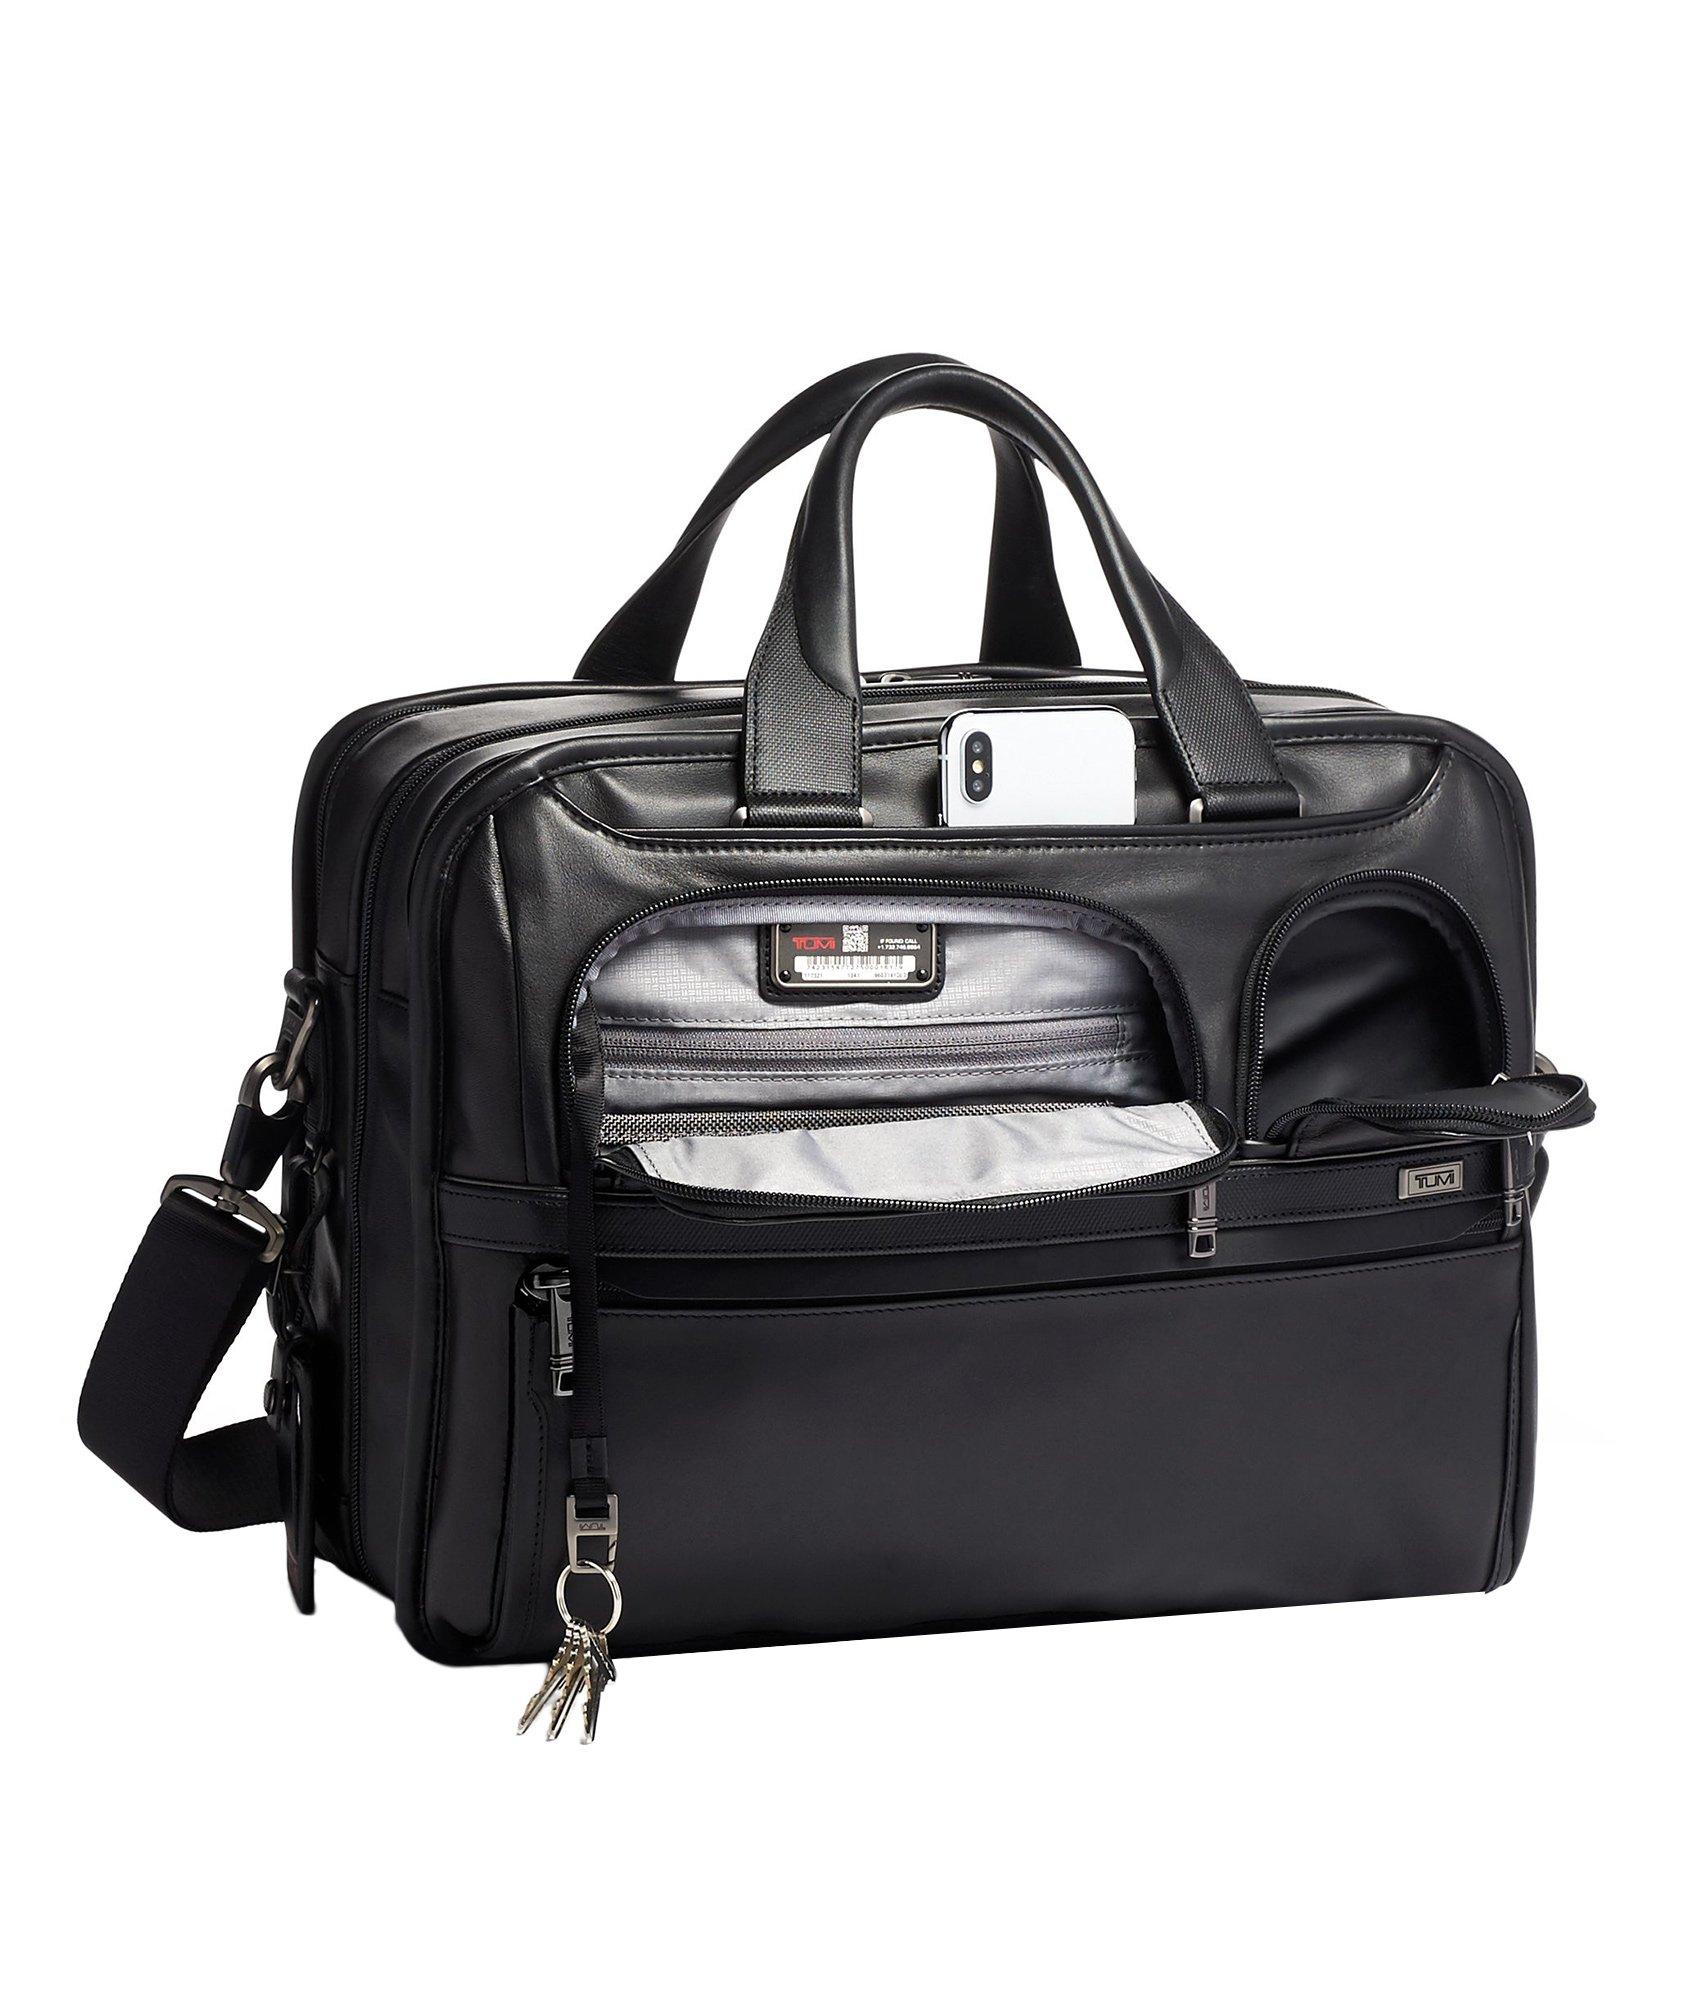 Tumi Expandable Organizer Laptop Briefcase | Bags & Cases | Harry Rosen